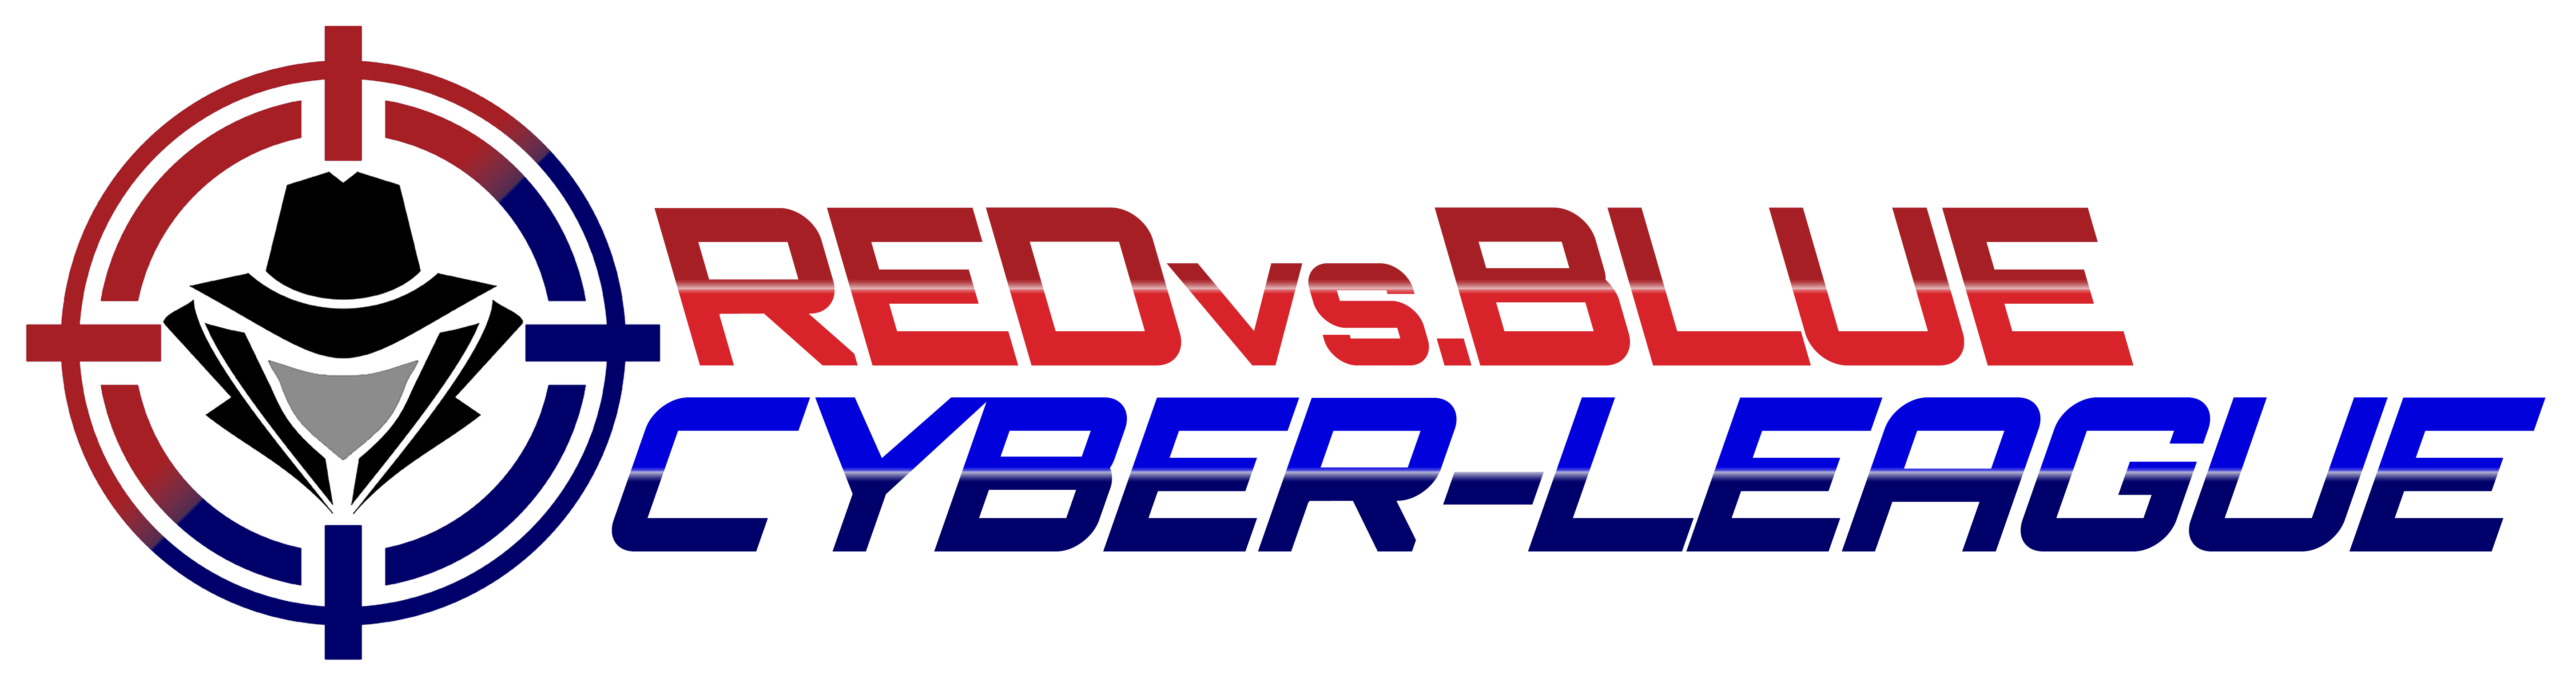 Red vs. Blue Cyber-League